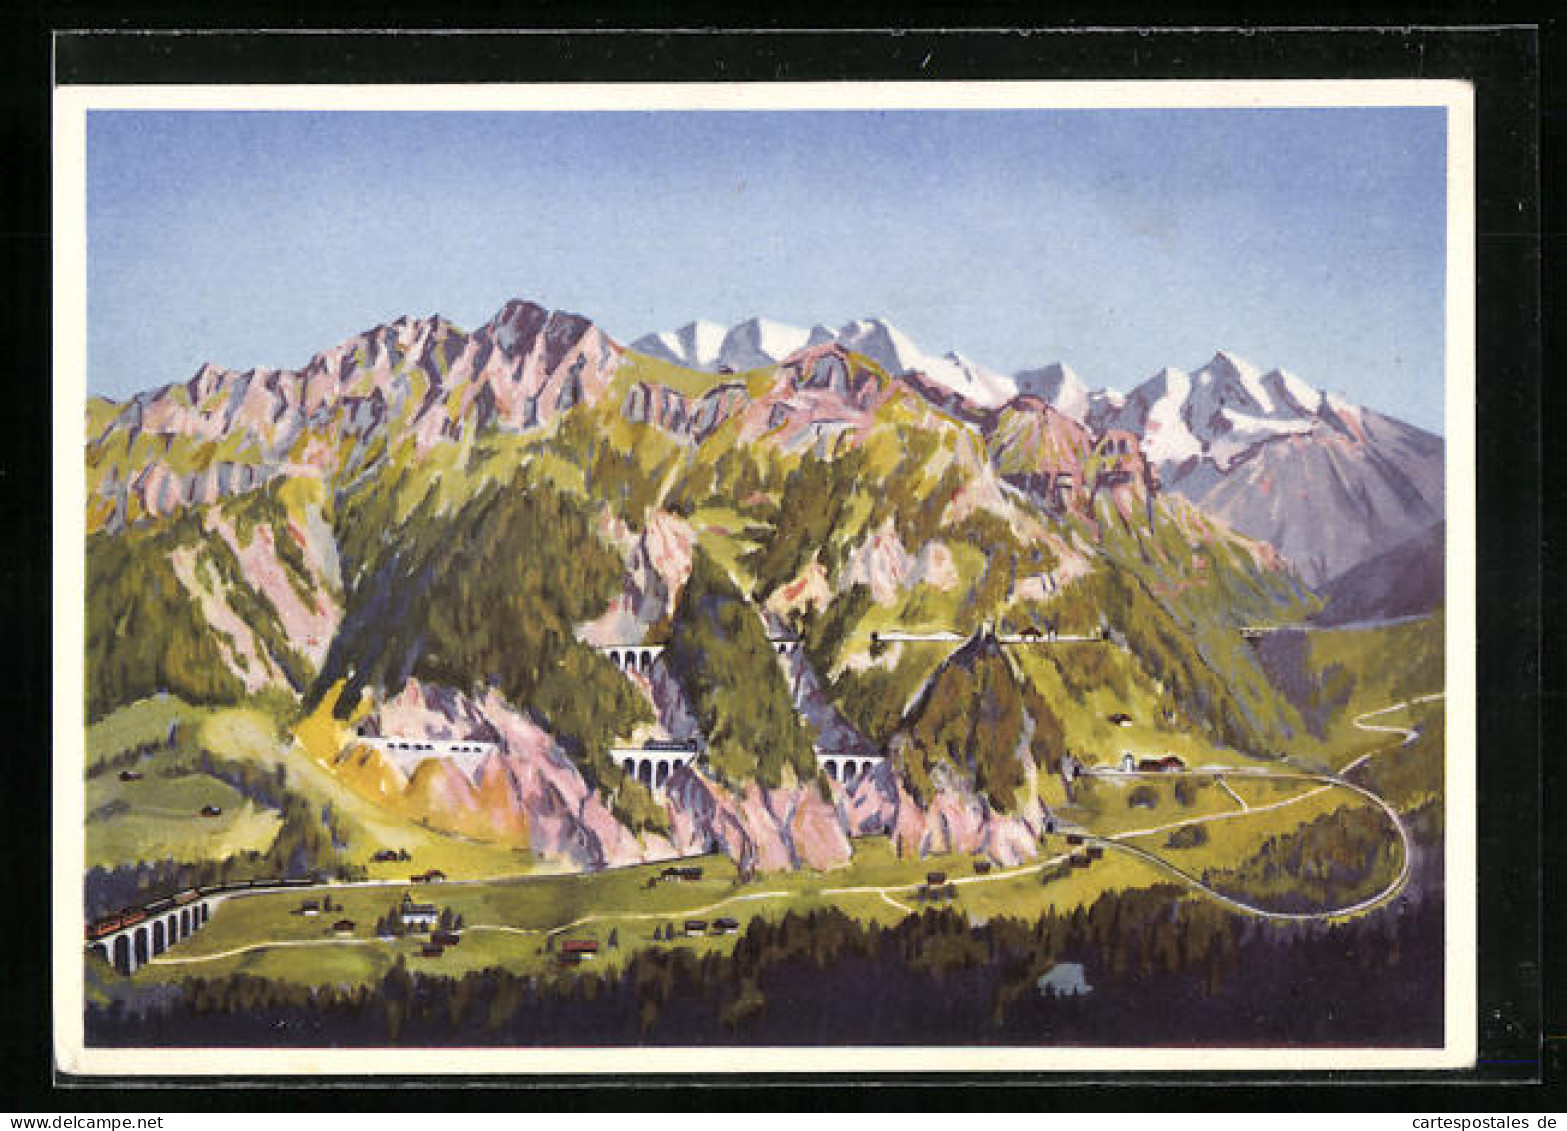 Künstler-AK Bern, Landesausstellung 1939, Modell-Anlage Der Loetschbergbahn Im Belvoirpark  - Expositions